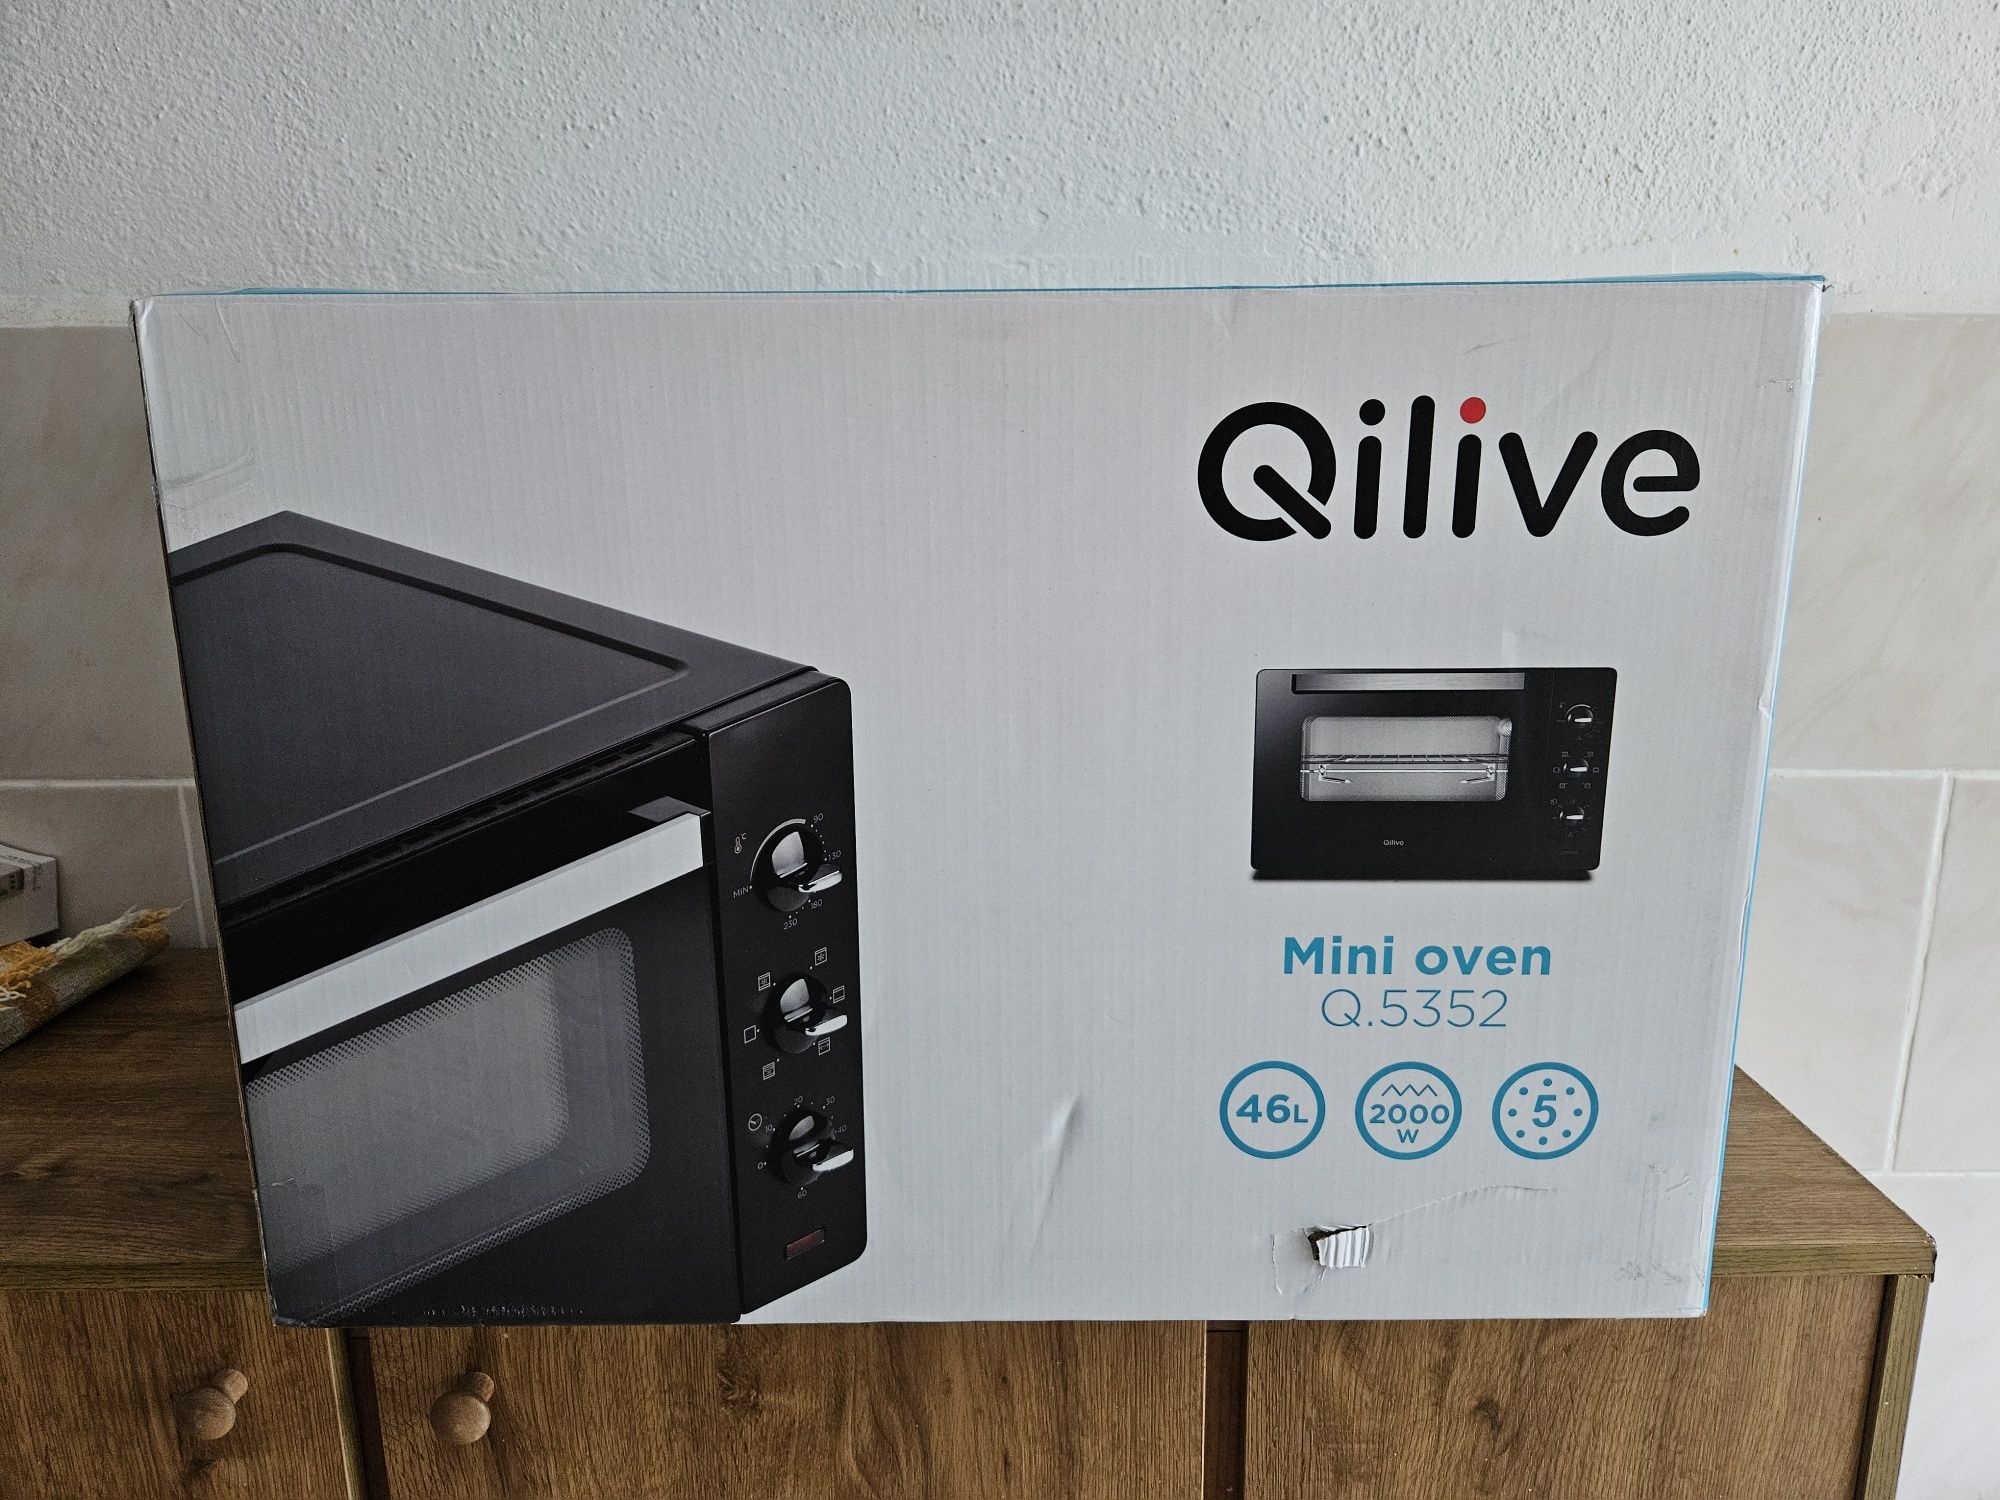 Mini forno Qilive Q.5352 | 46L 2000W - Novo, Nunca Usado!